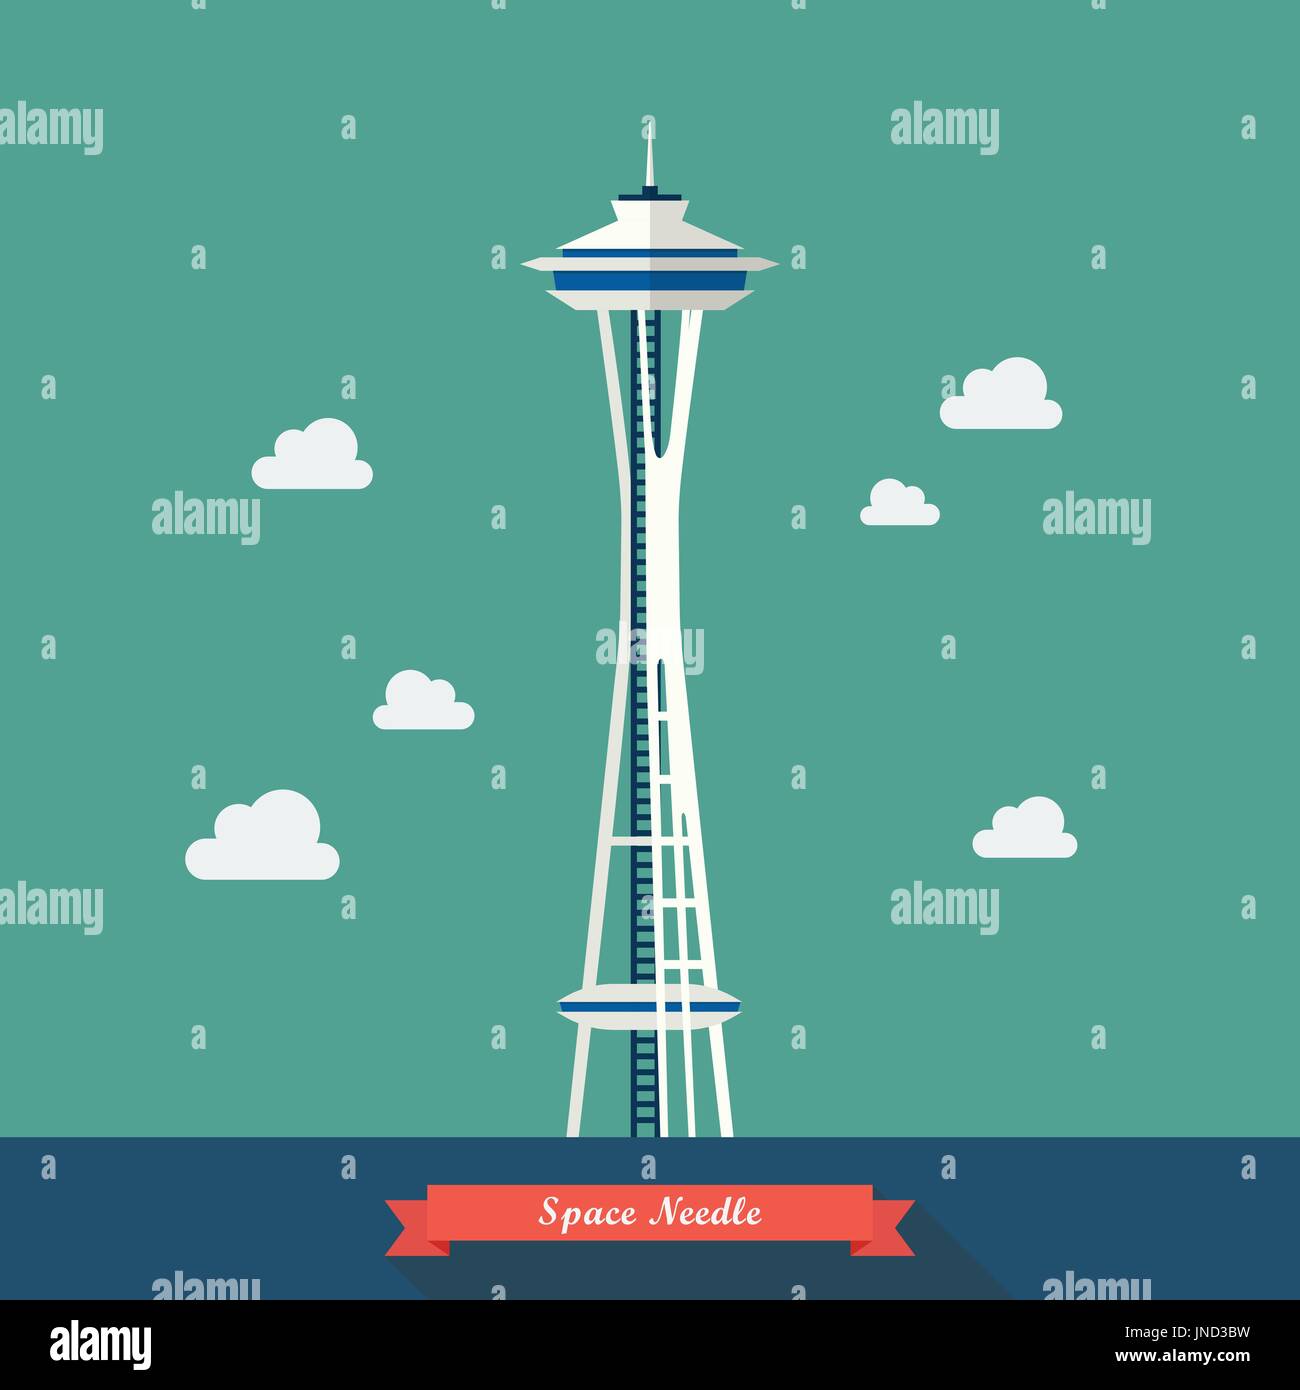 Space Needle. Aussichtsturm in Seattle. Vektor-illustration Stock Vektor